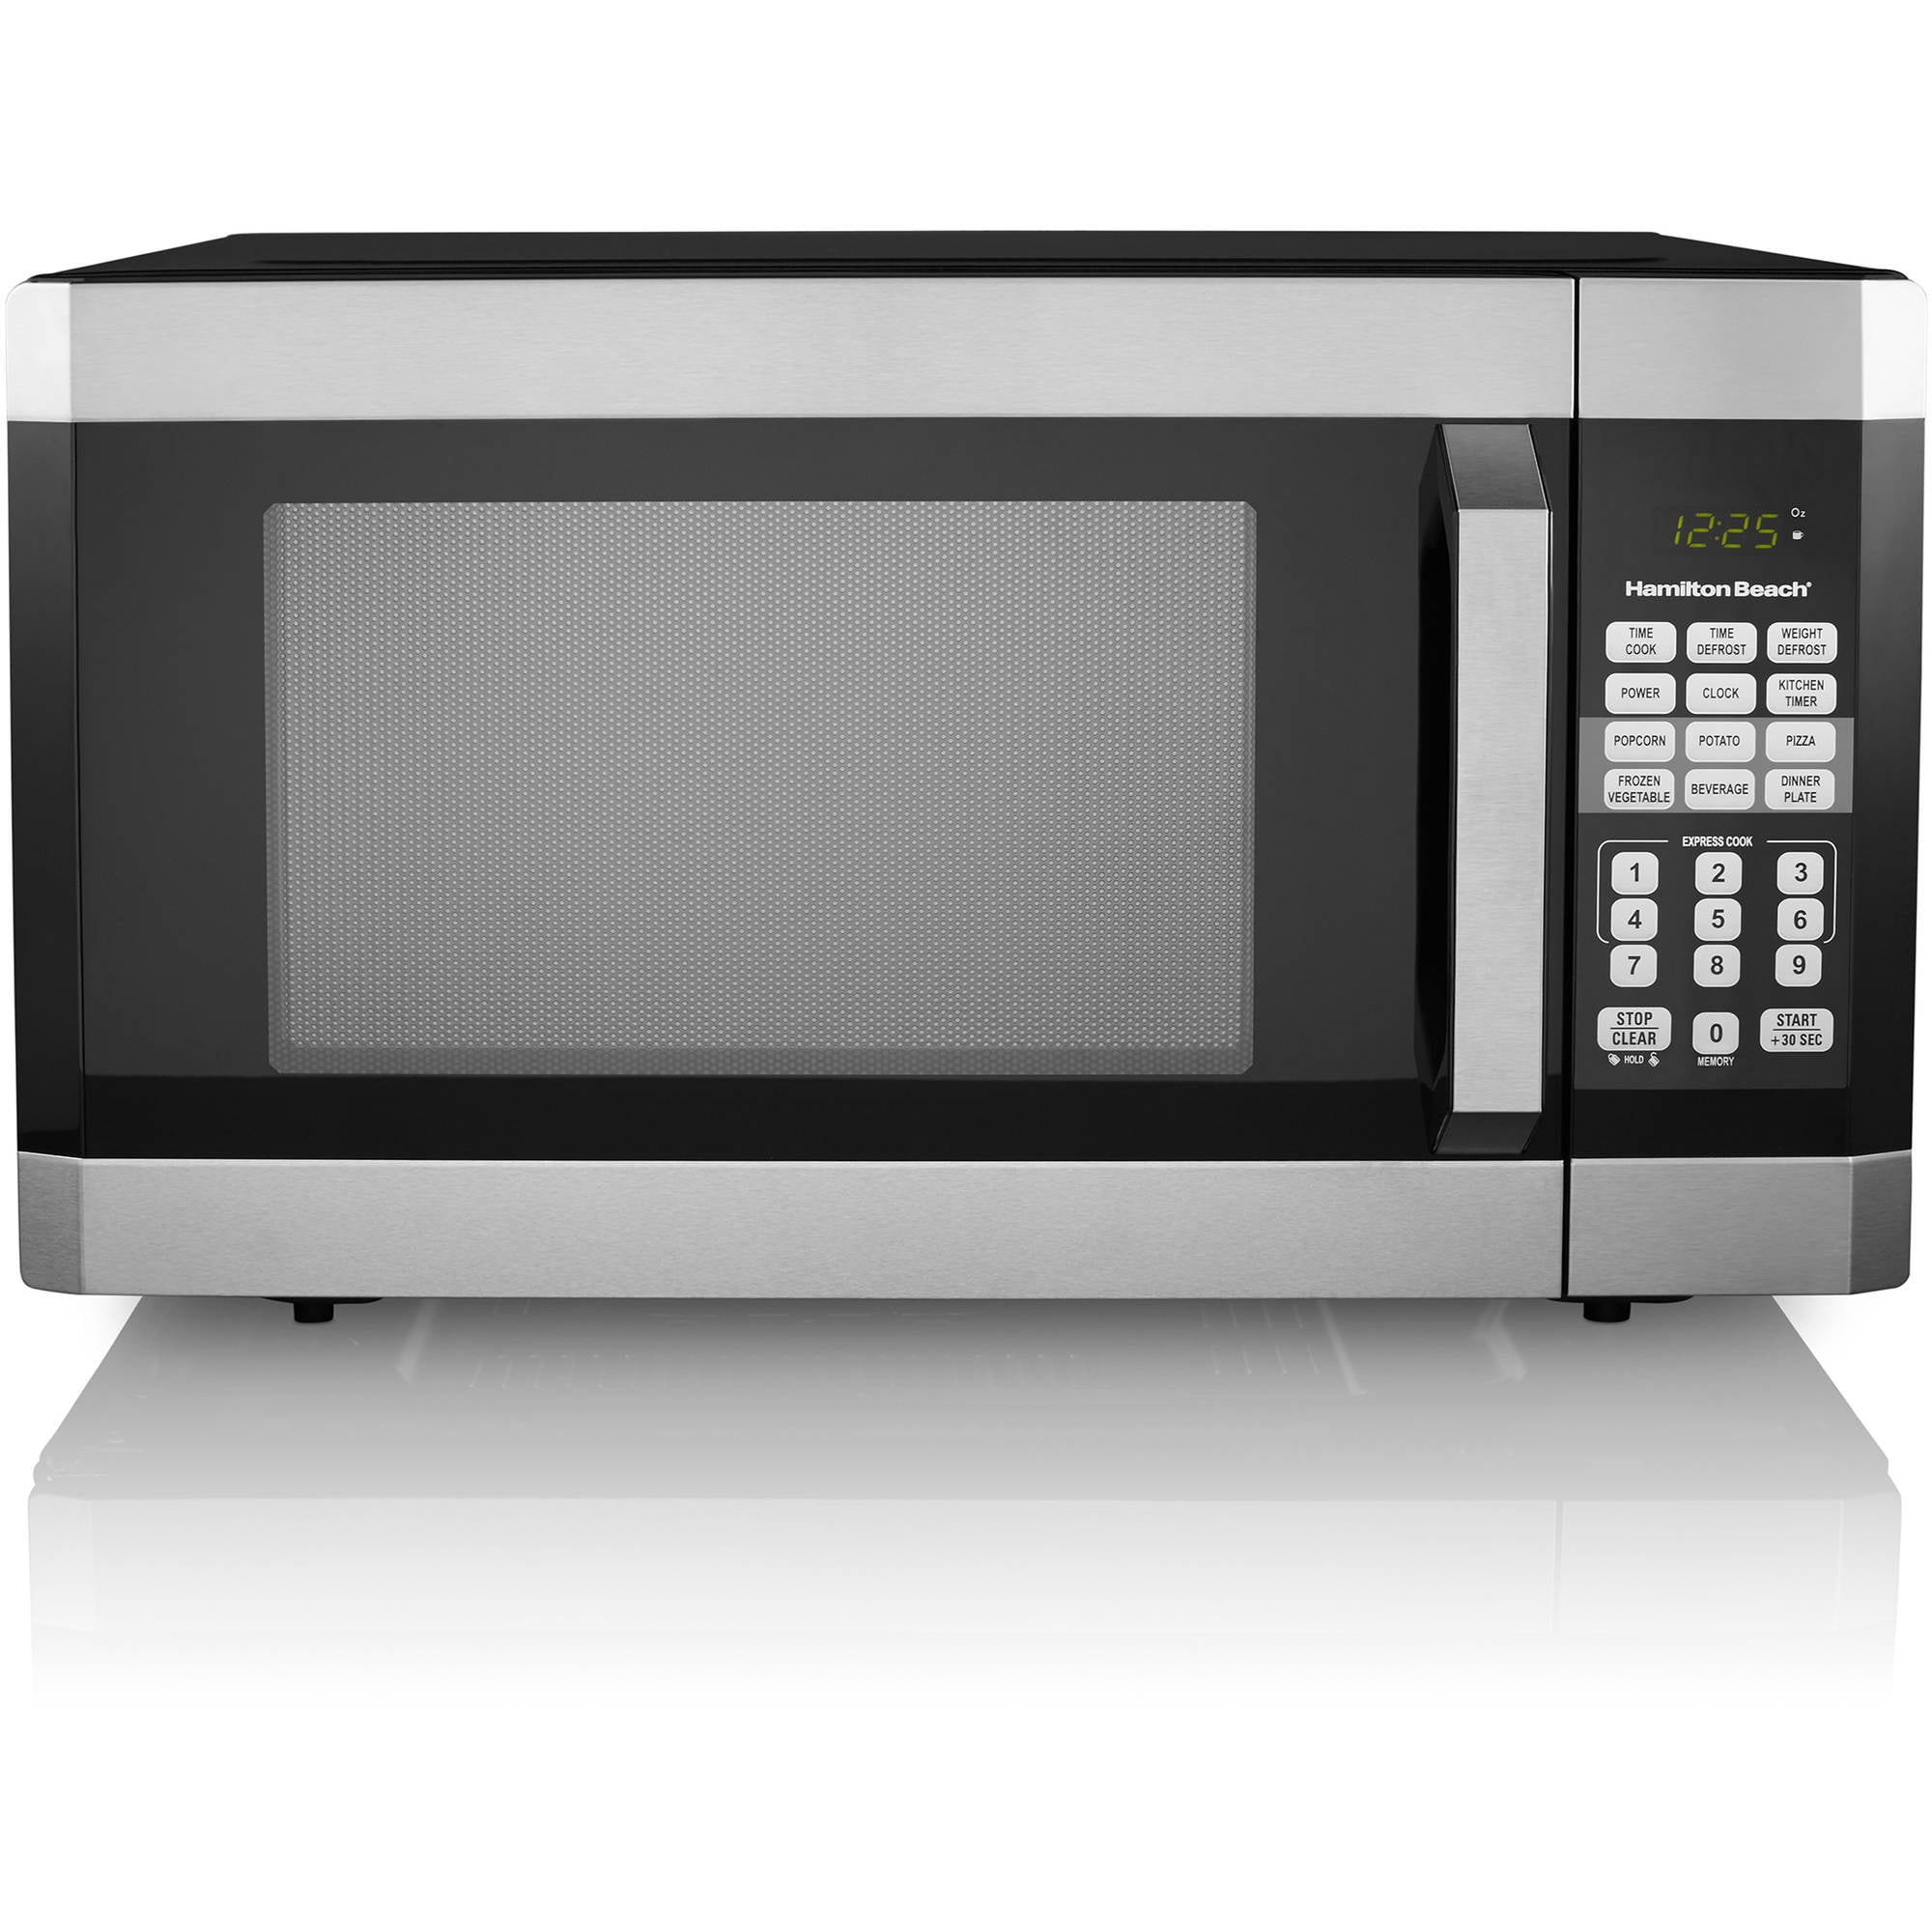 Hamilton Beach 1.6 Cu ft Digital Microwave Oven Stainless Steel